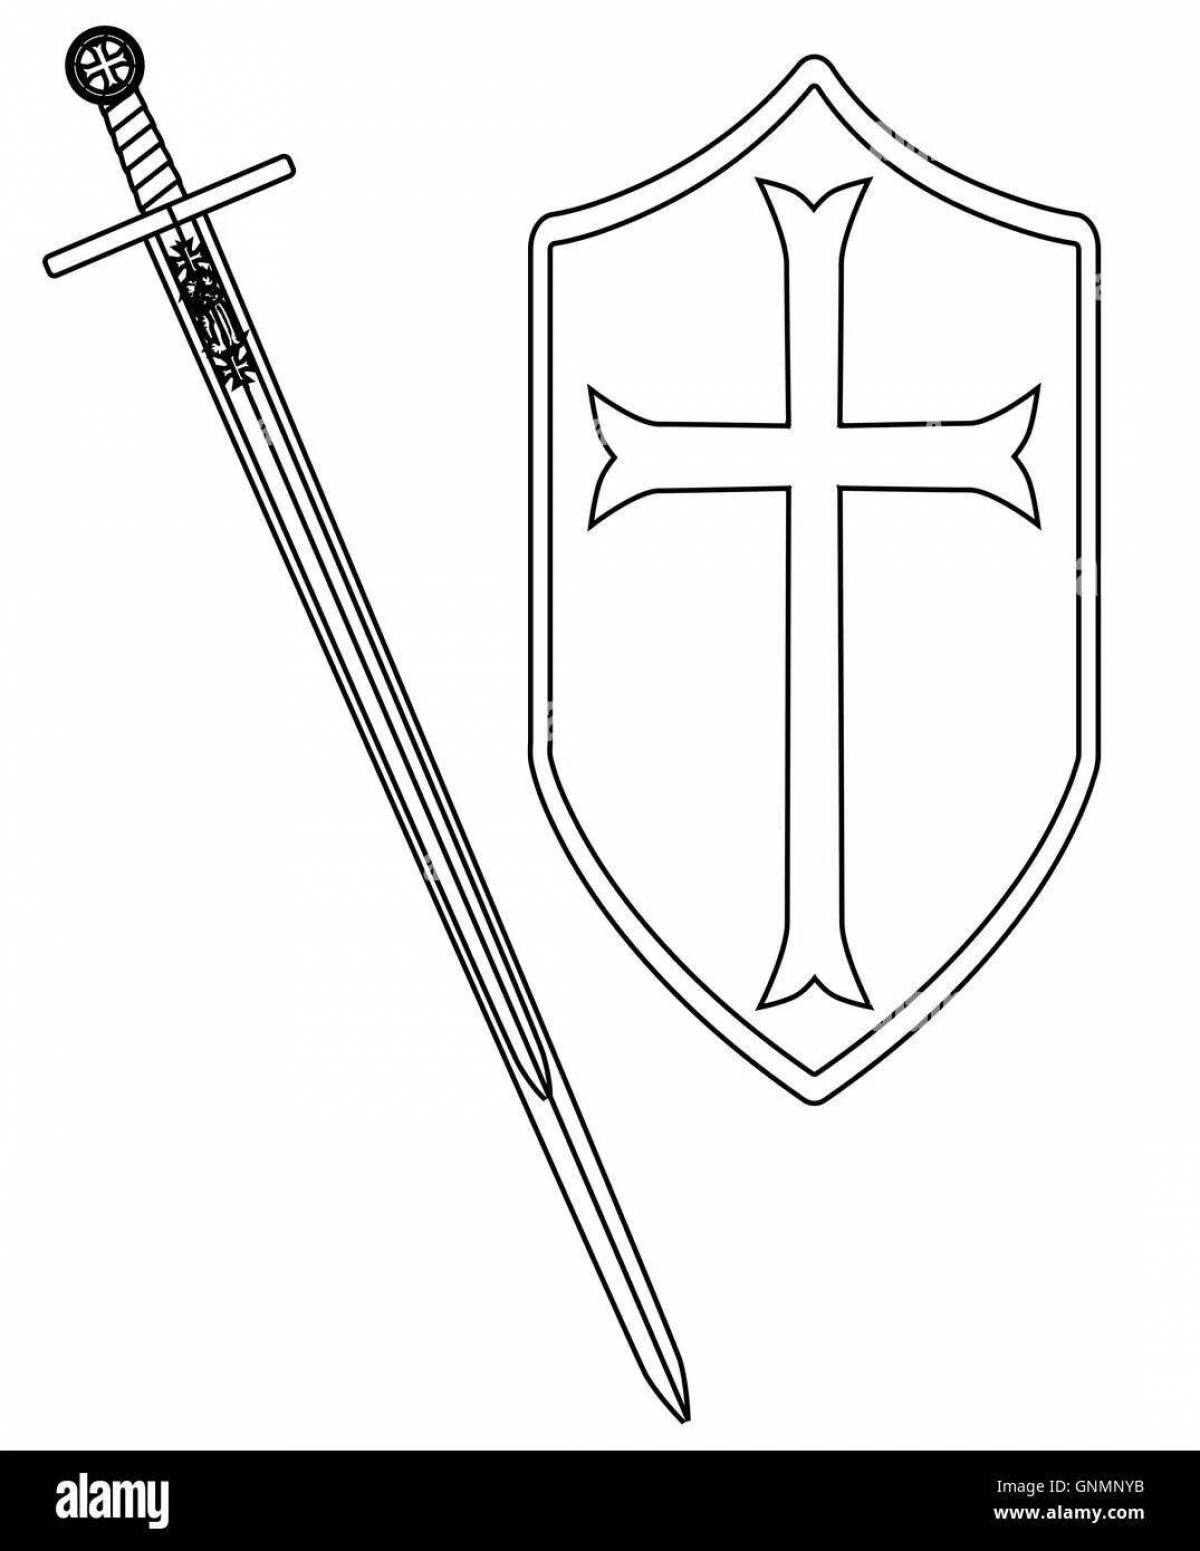 Изящная страница раскраски щита и меча